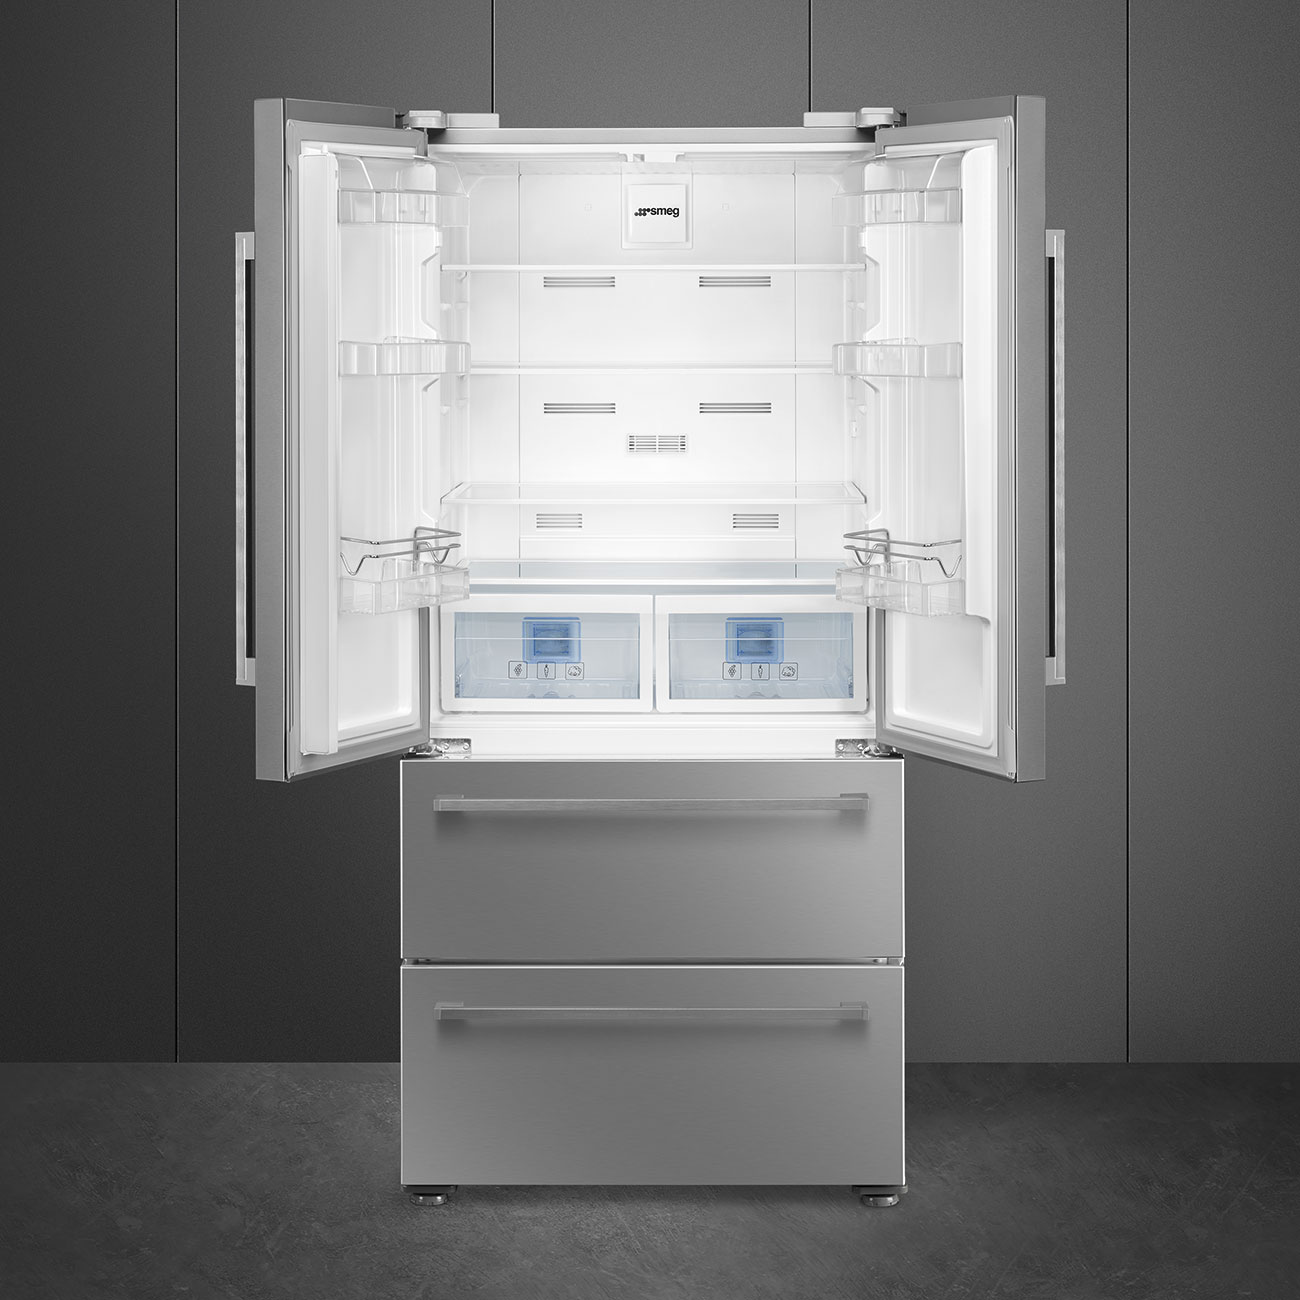 2 Doors & 2 Drawers Free standing refrigerator - Smeg_4